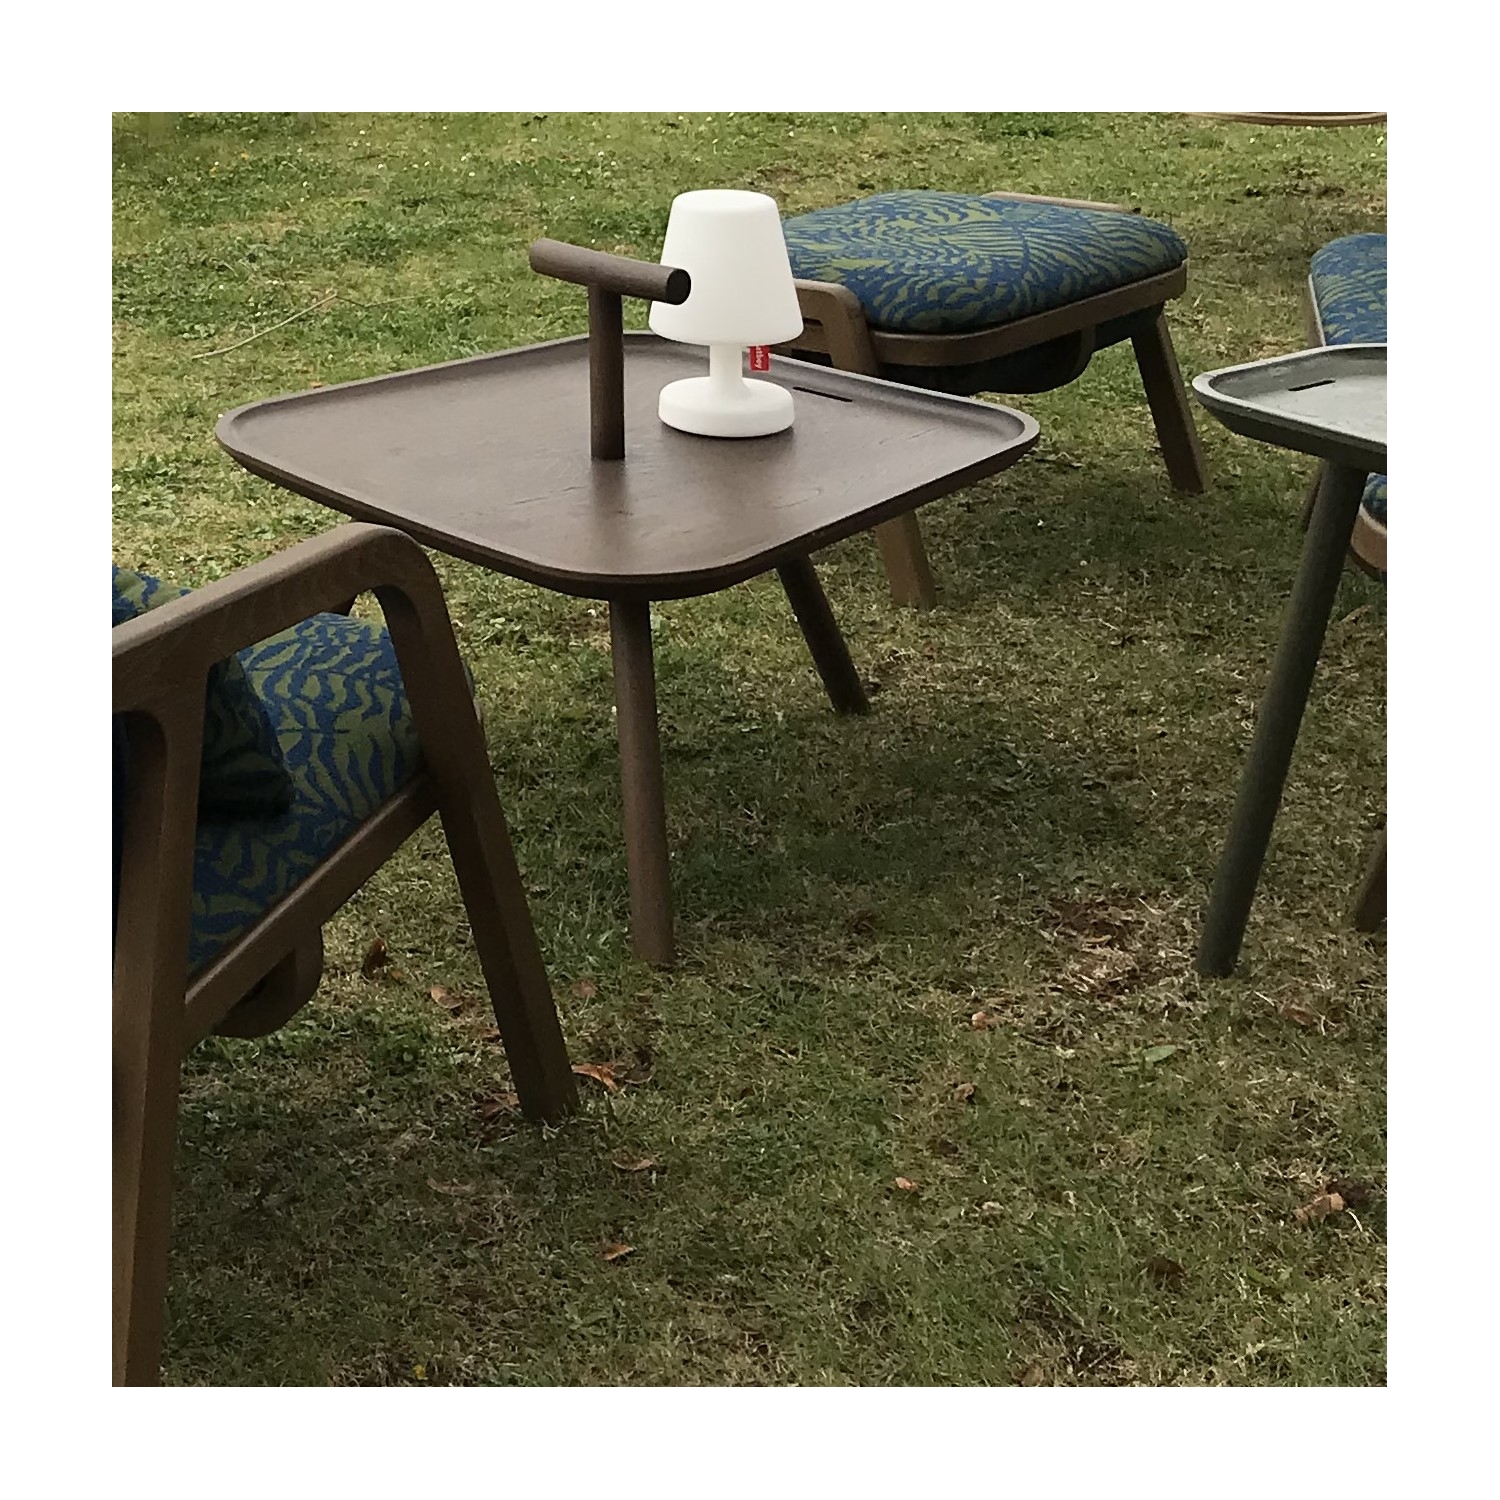 The BERGAMOTE tripod coffee table